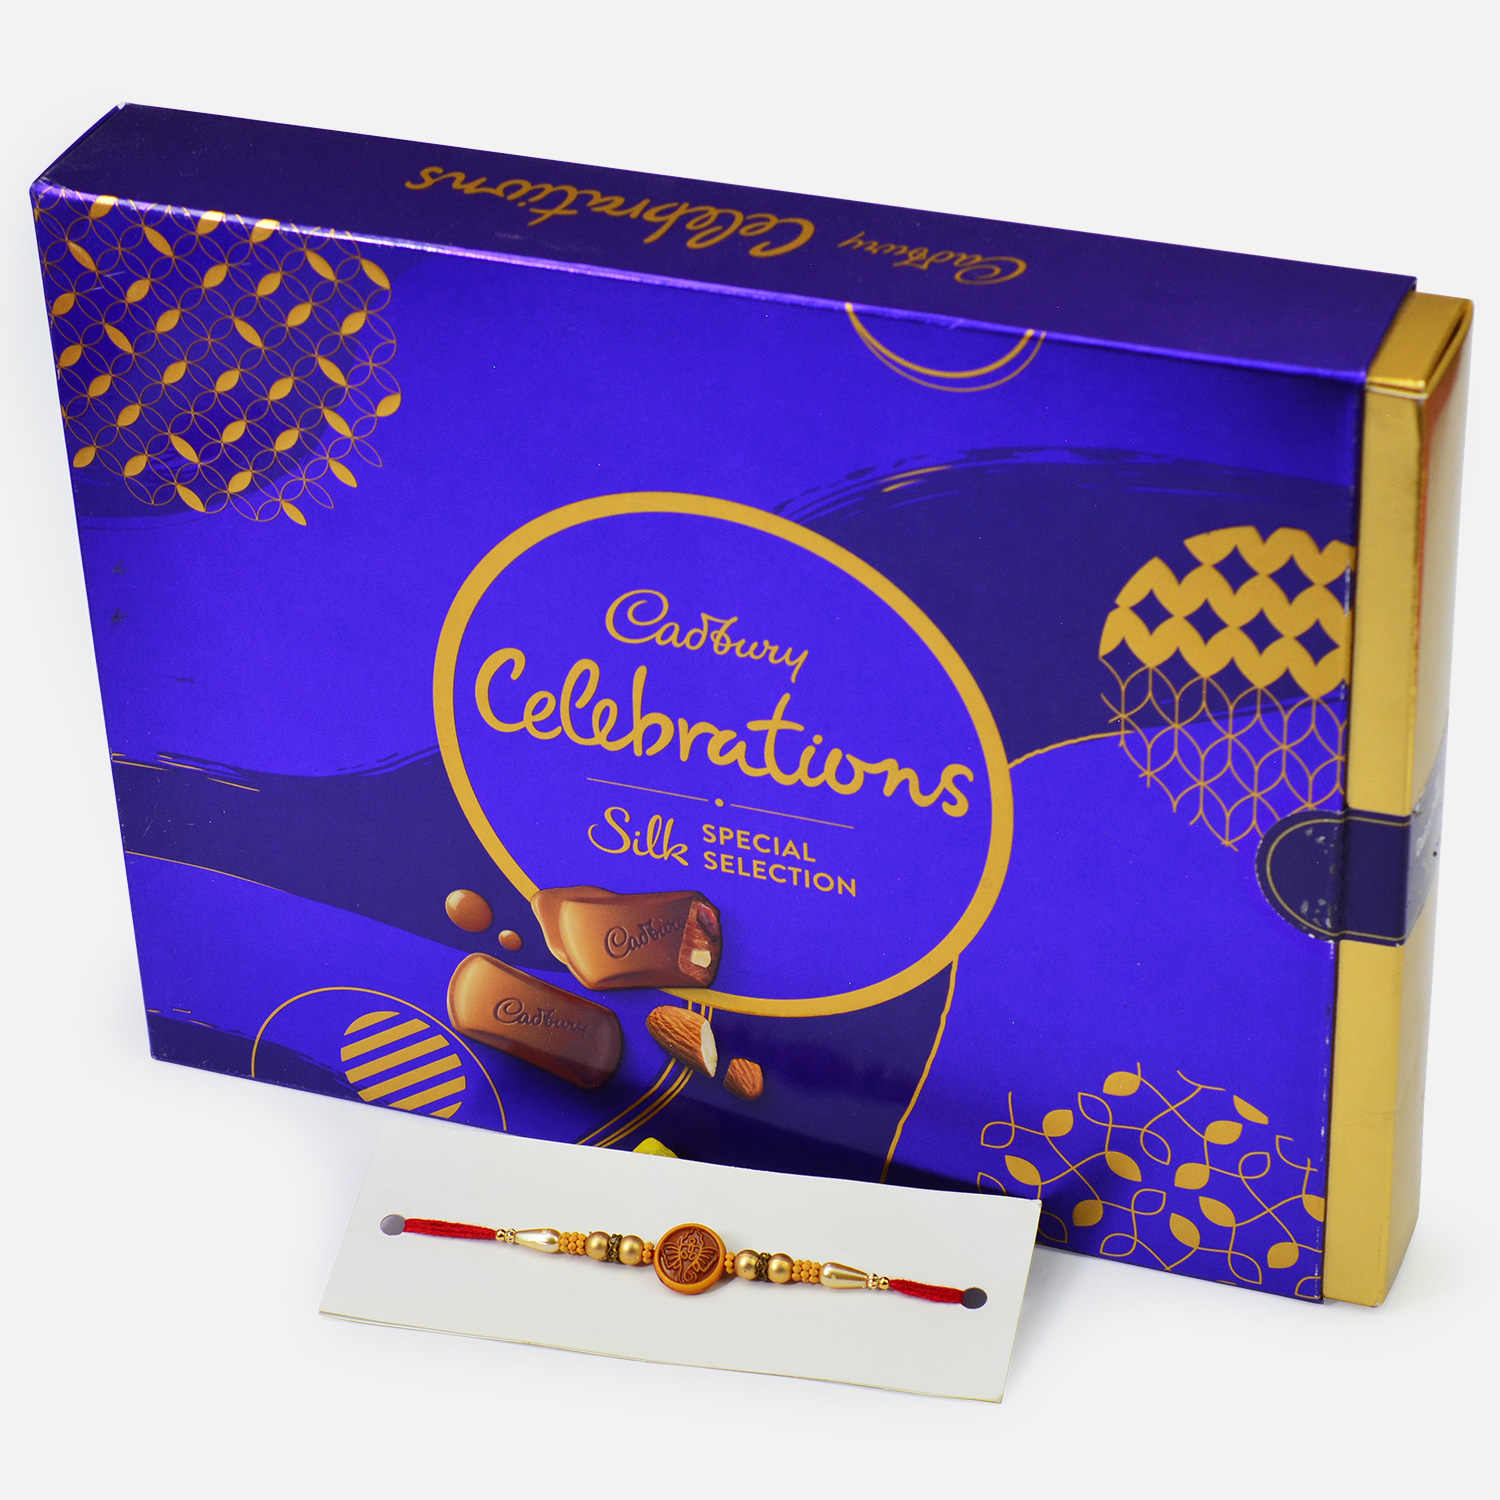 Cadbury Celebration Silk Special Edition Small Pack Chocolate with Simple Ganesha Brother Rakhi